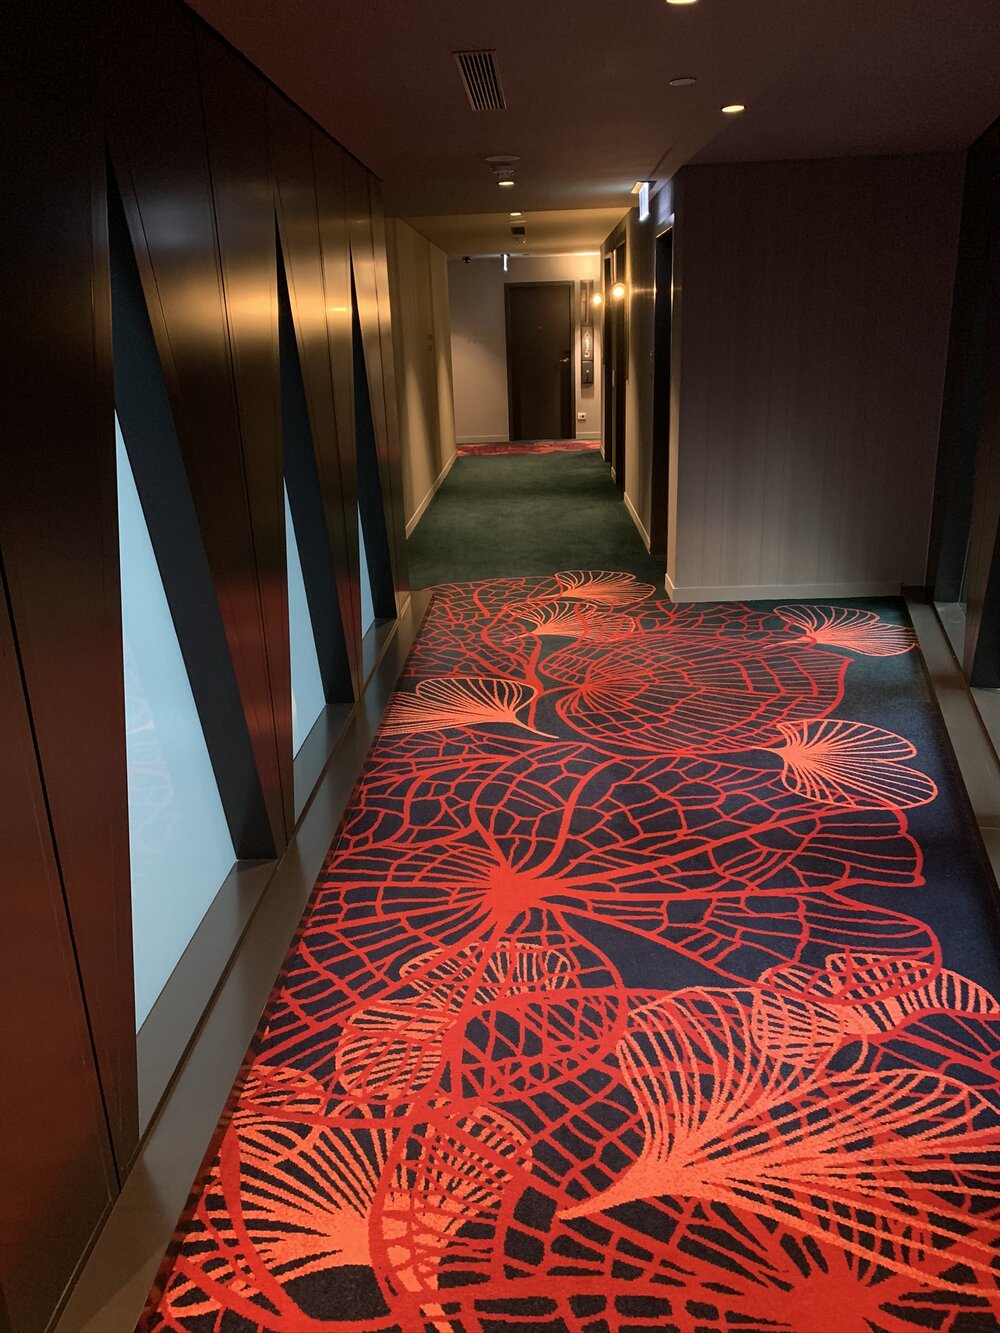 West Hotel Sydney top floor carpet detail.JPG